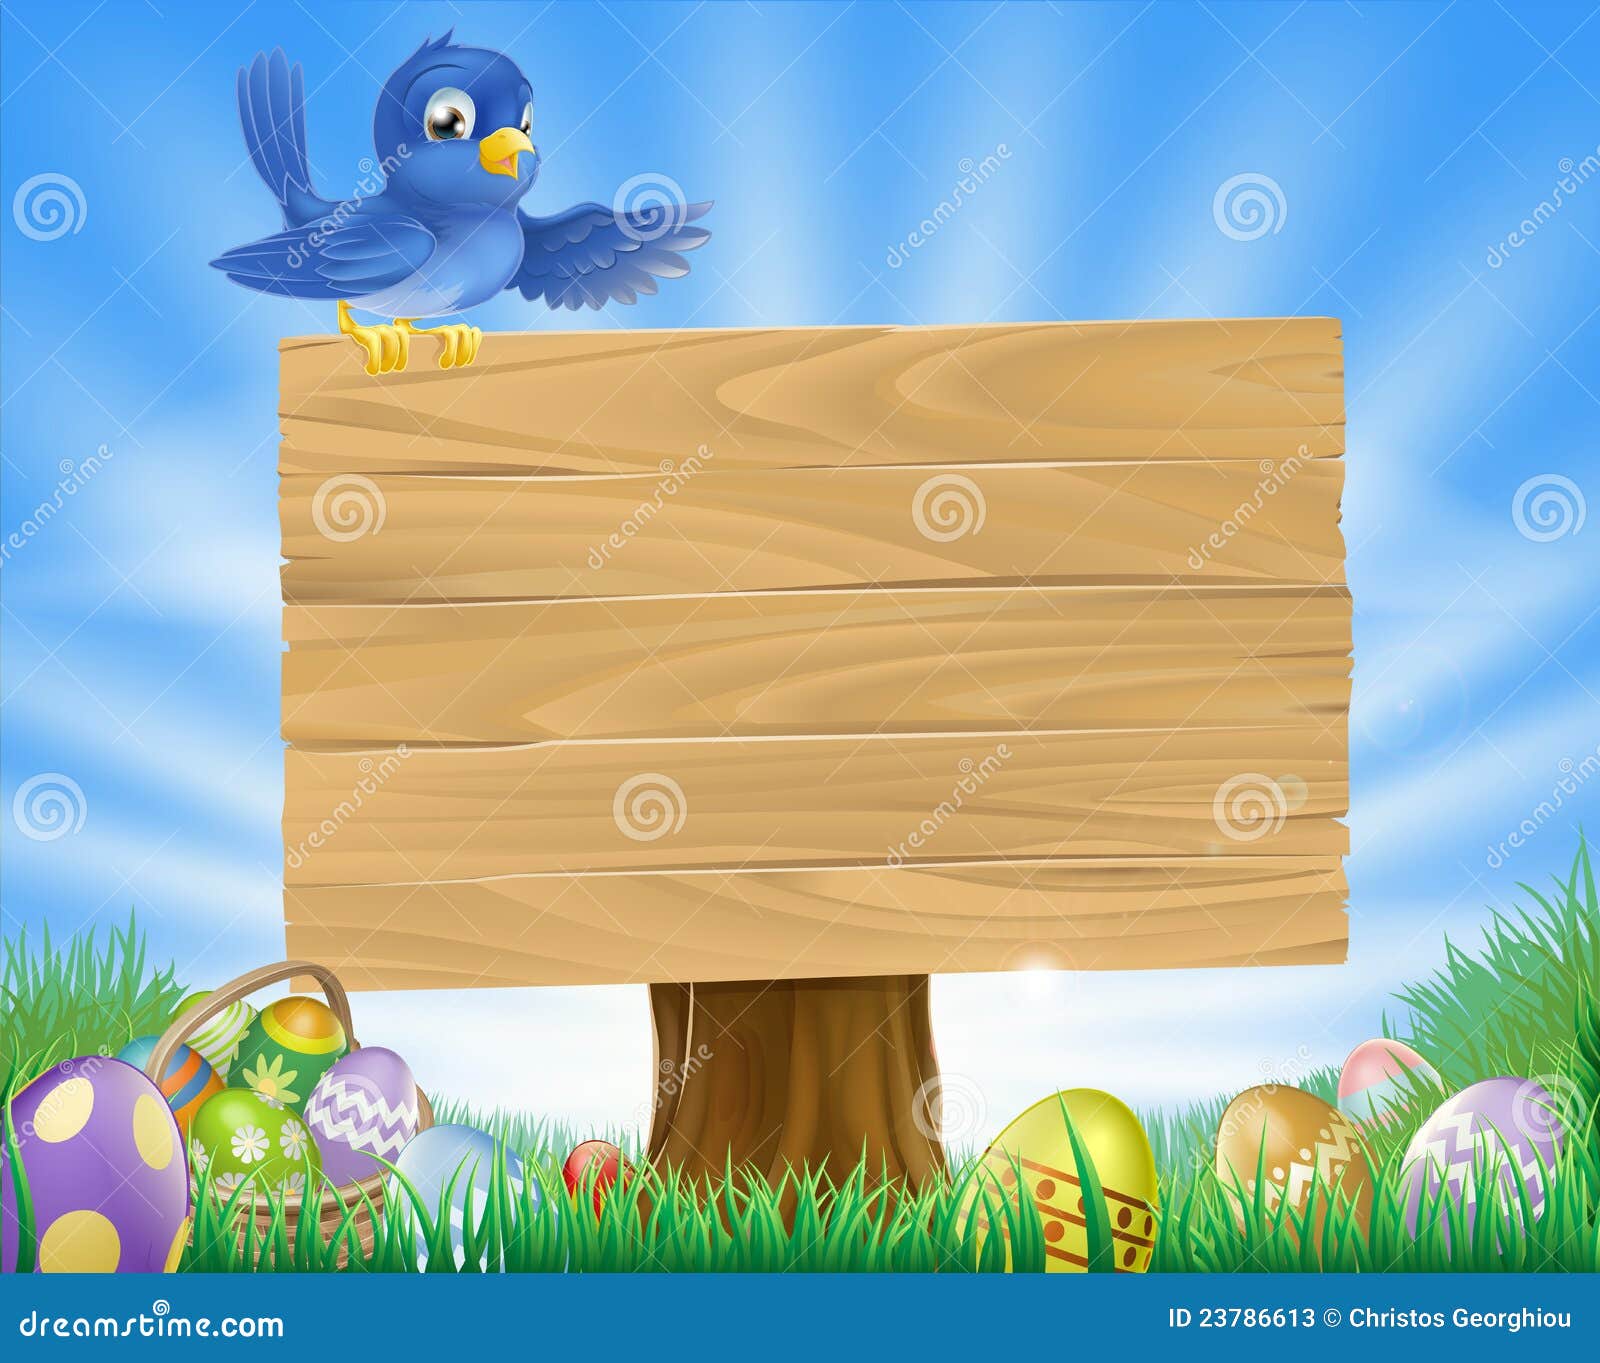 Bluebird Easter Cartoon Background Stock Vector Image 23786613